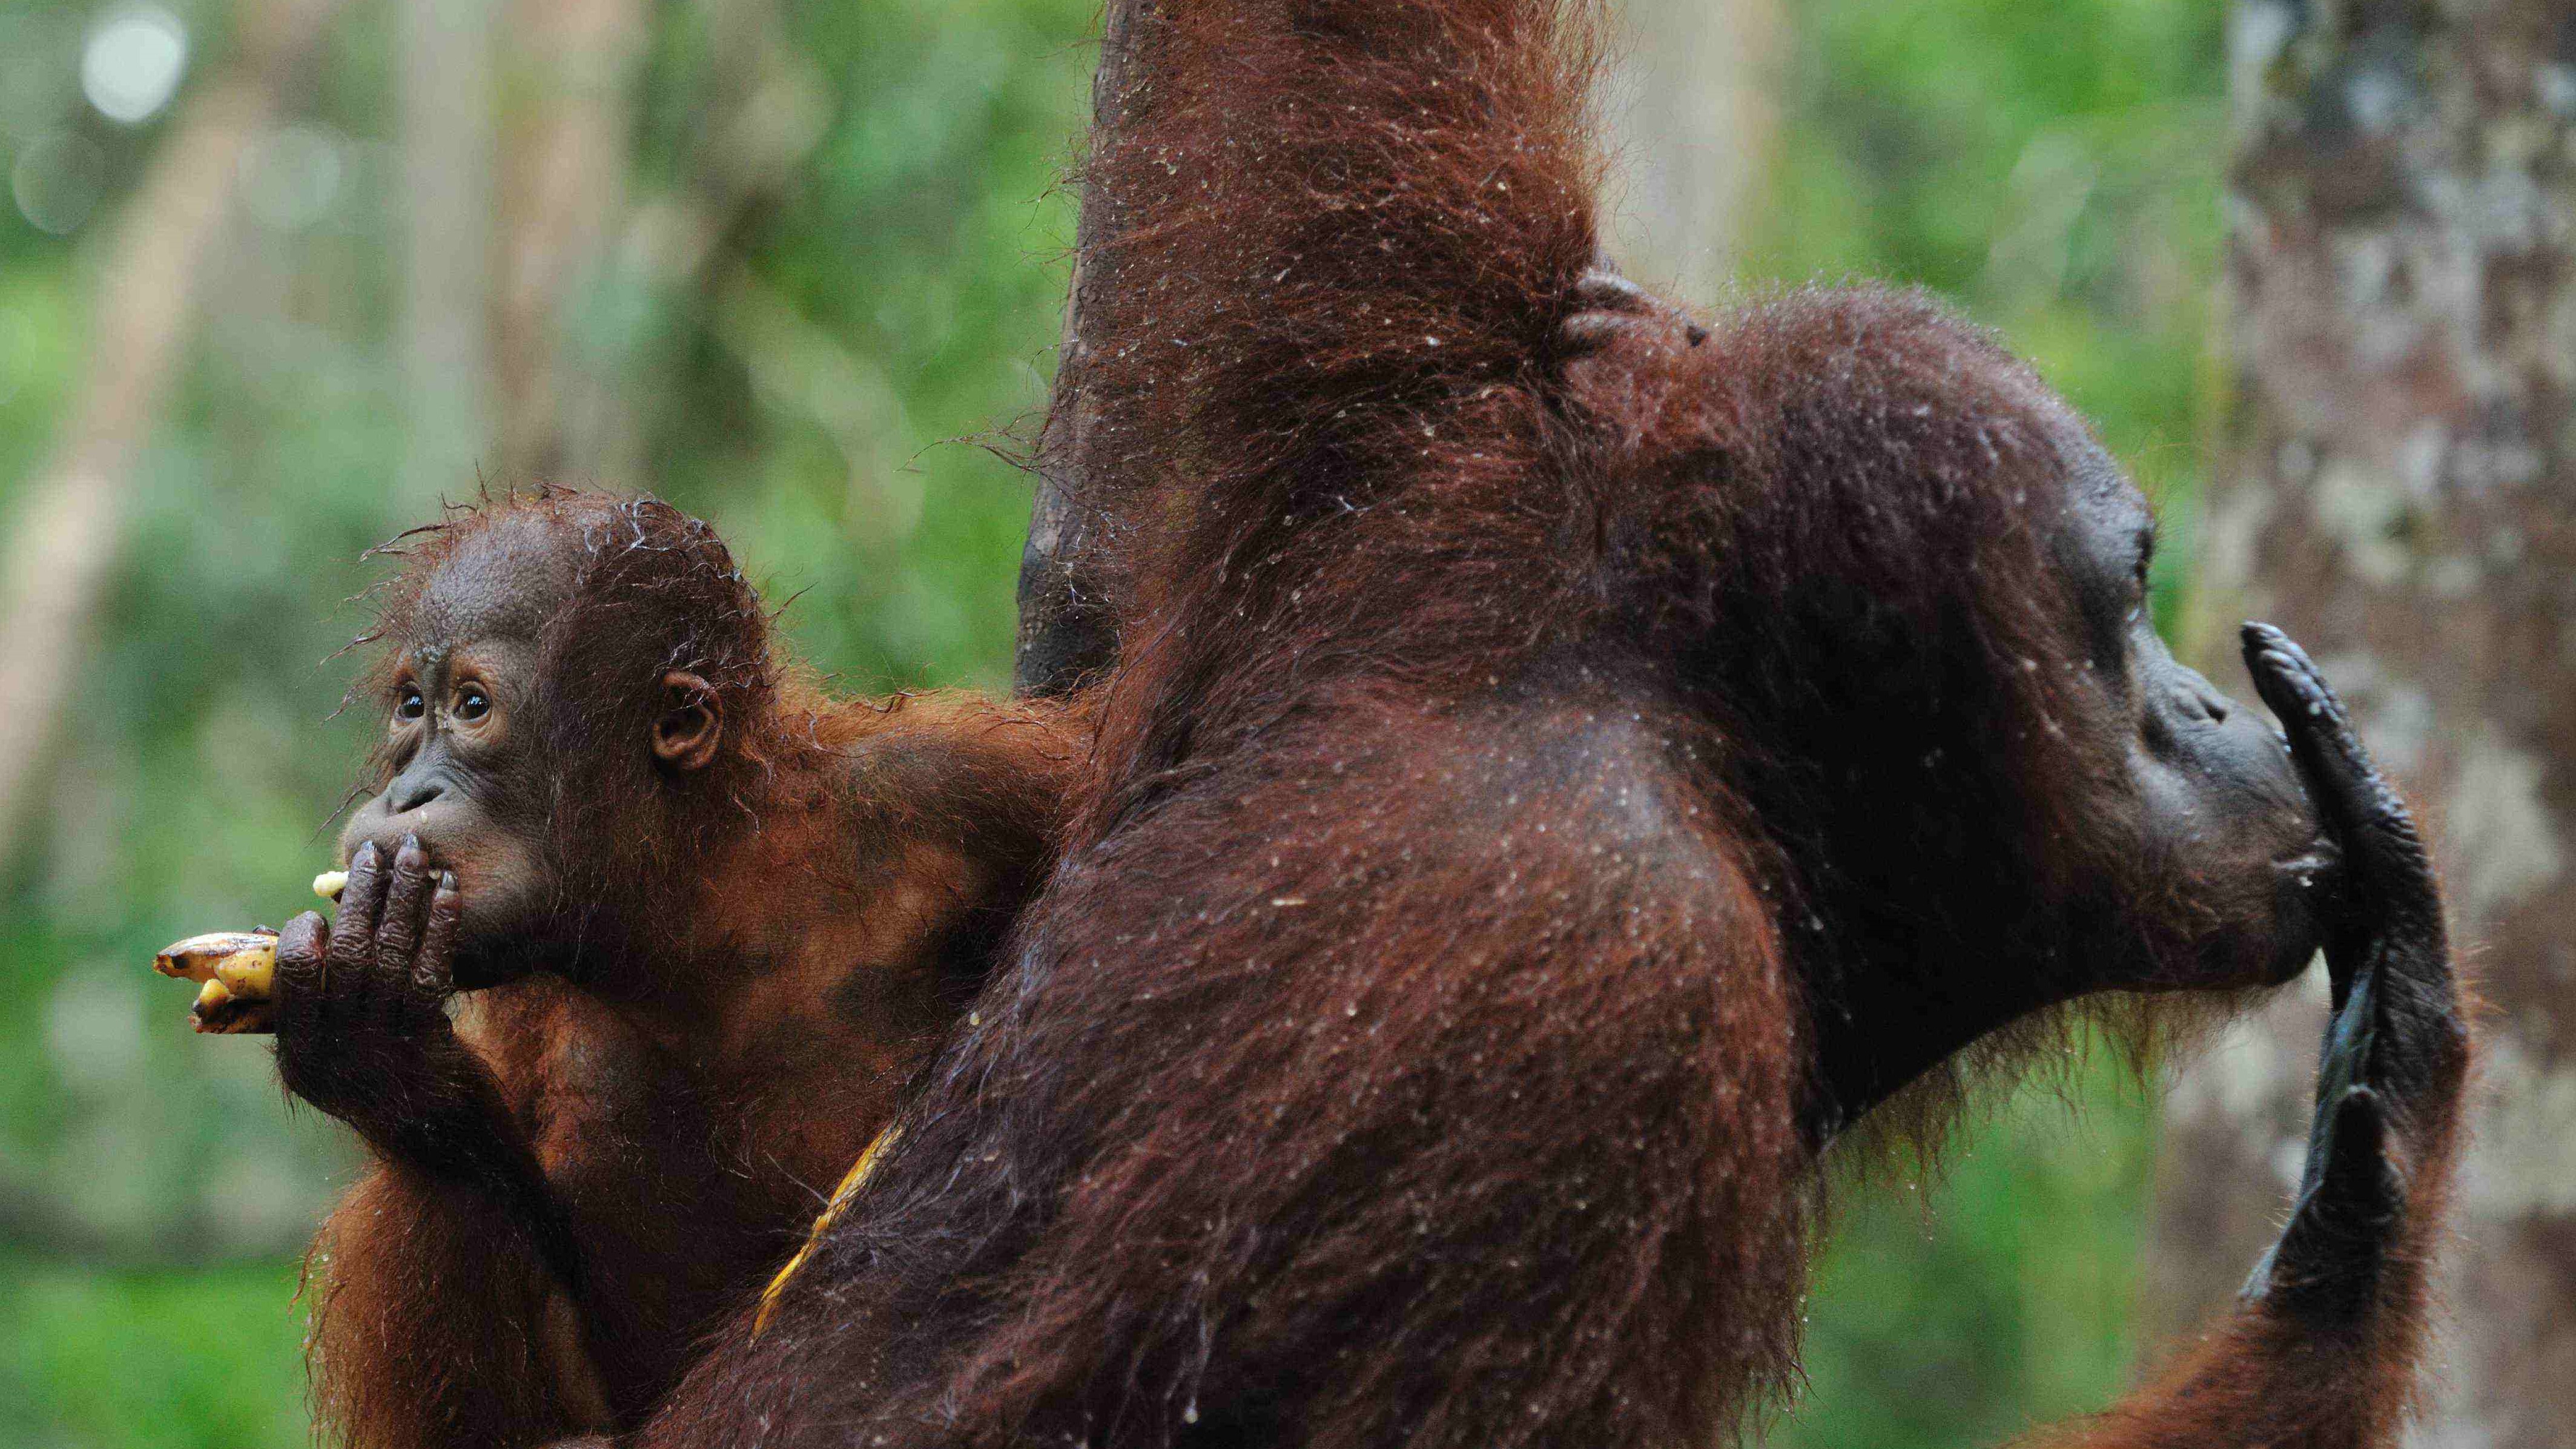 kalimantan wildlife diversity tour orangutan wildlife dayak culture, rain forest jungle trek guide trips borneo indonesia